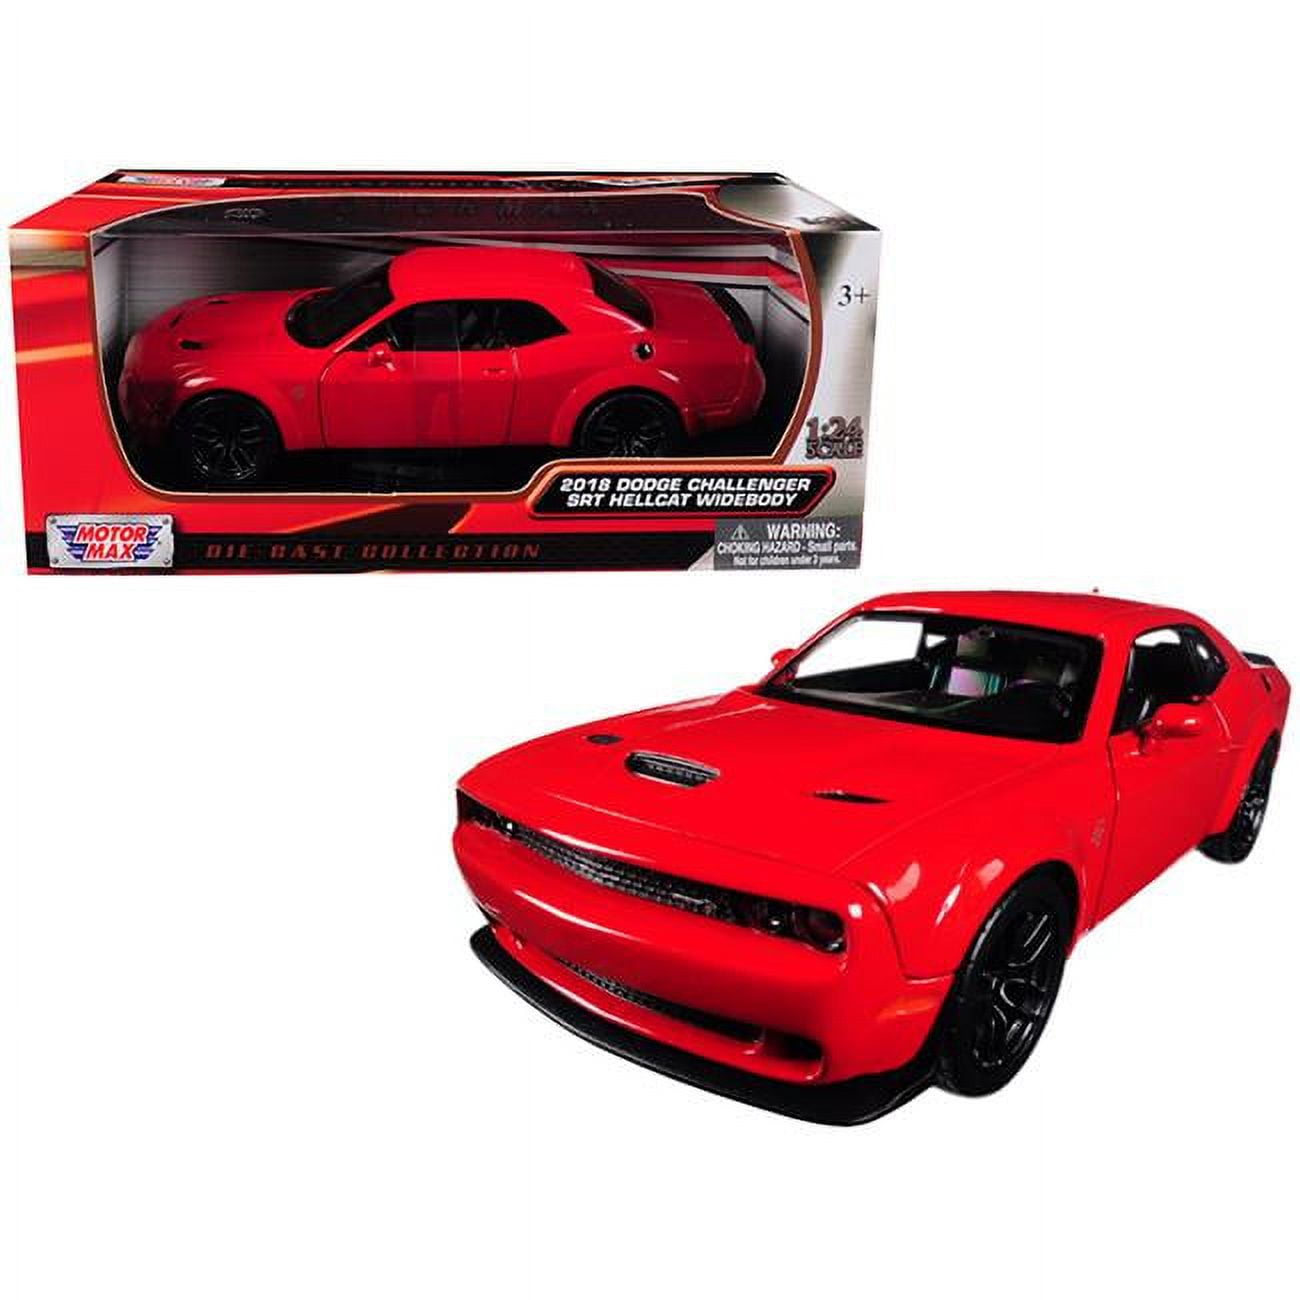 79350r 1 Isto 24 2018 Dodge Challenger Srt Hellcat Widebody Diecast Model Car - Red